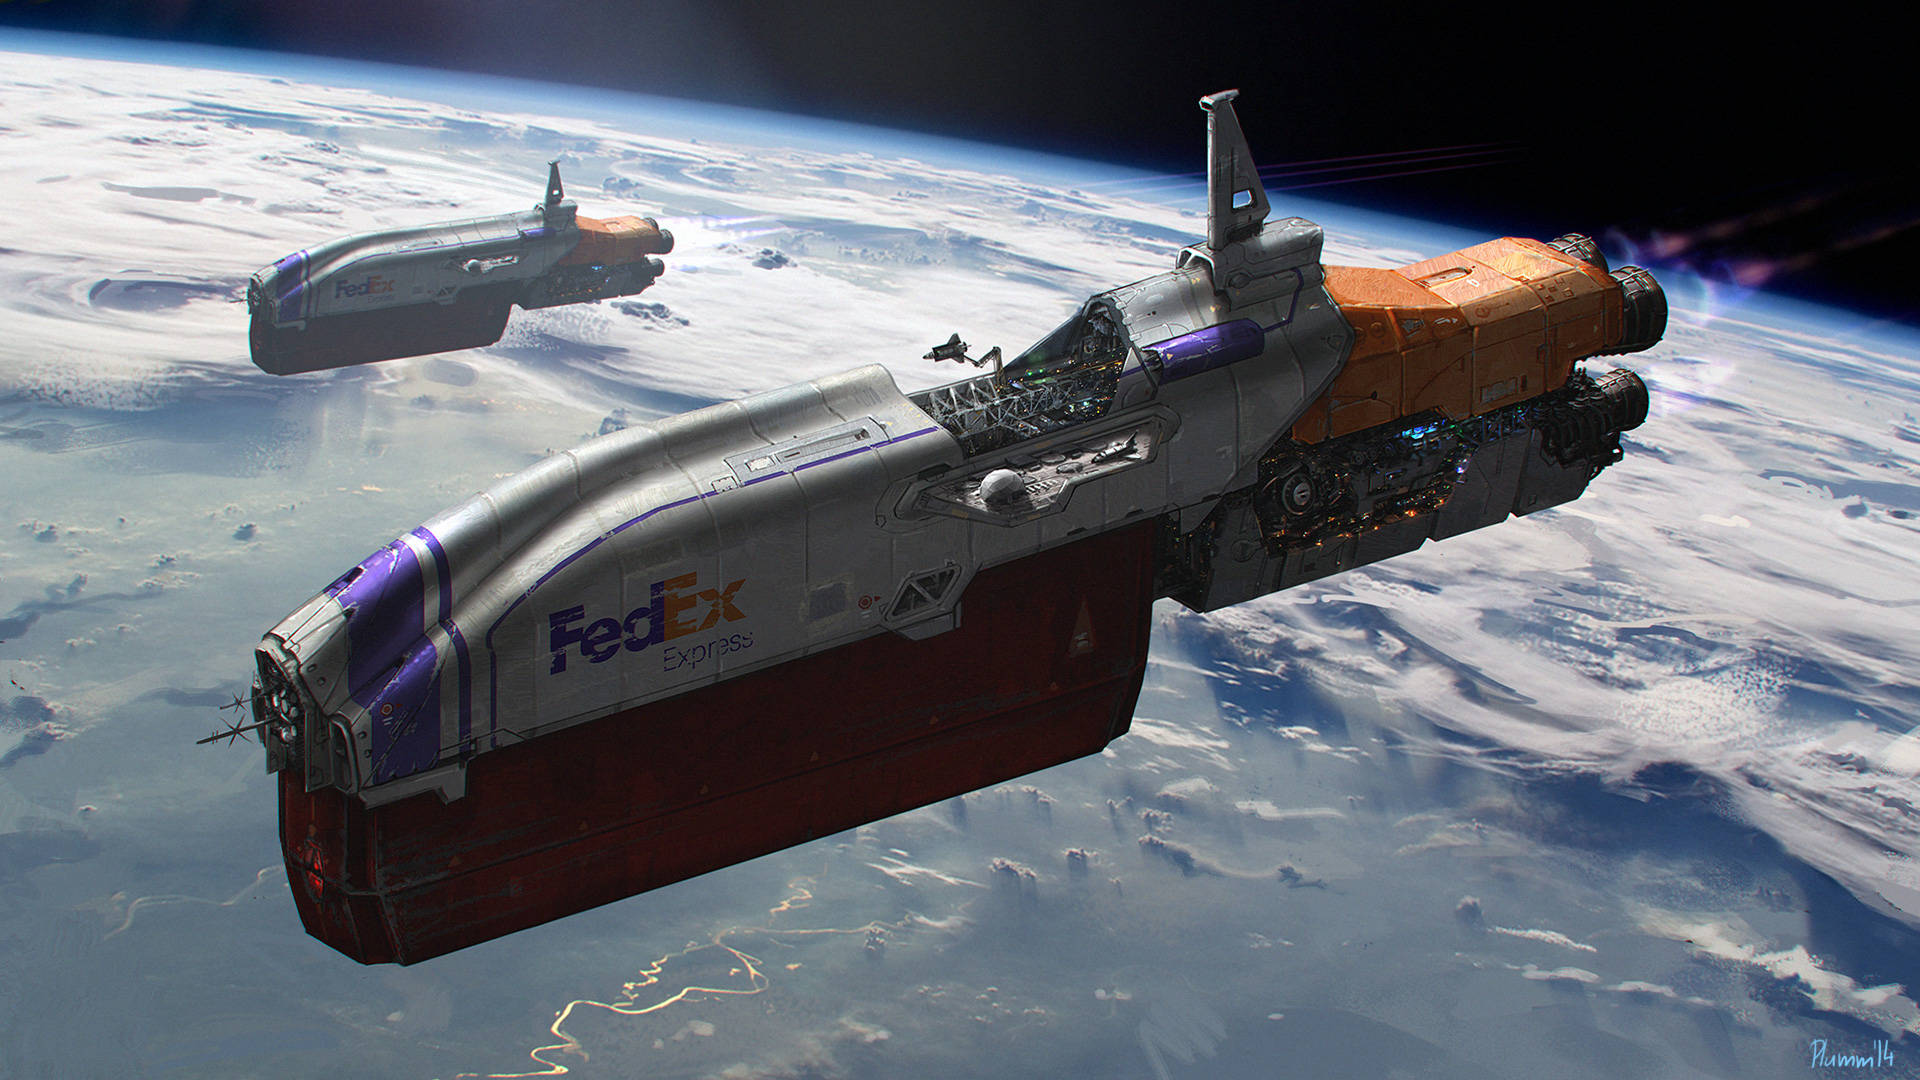 FedEx Spaceships Digital Art Wallpaper